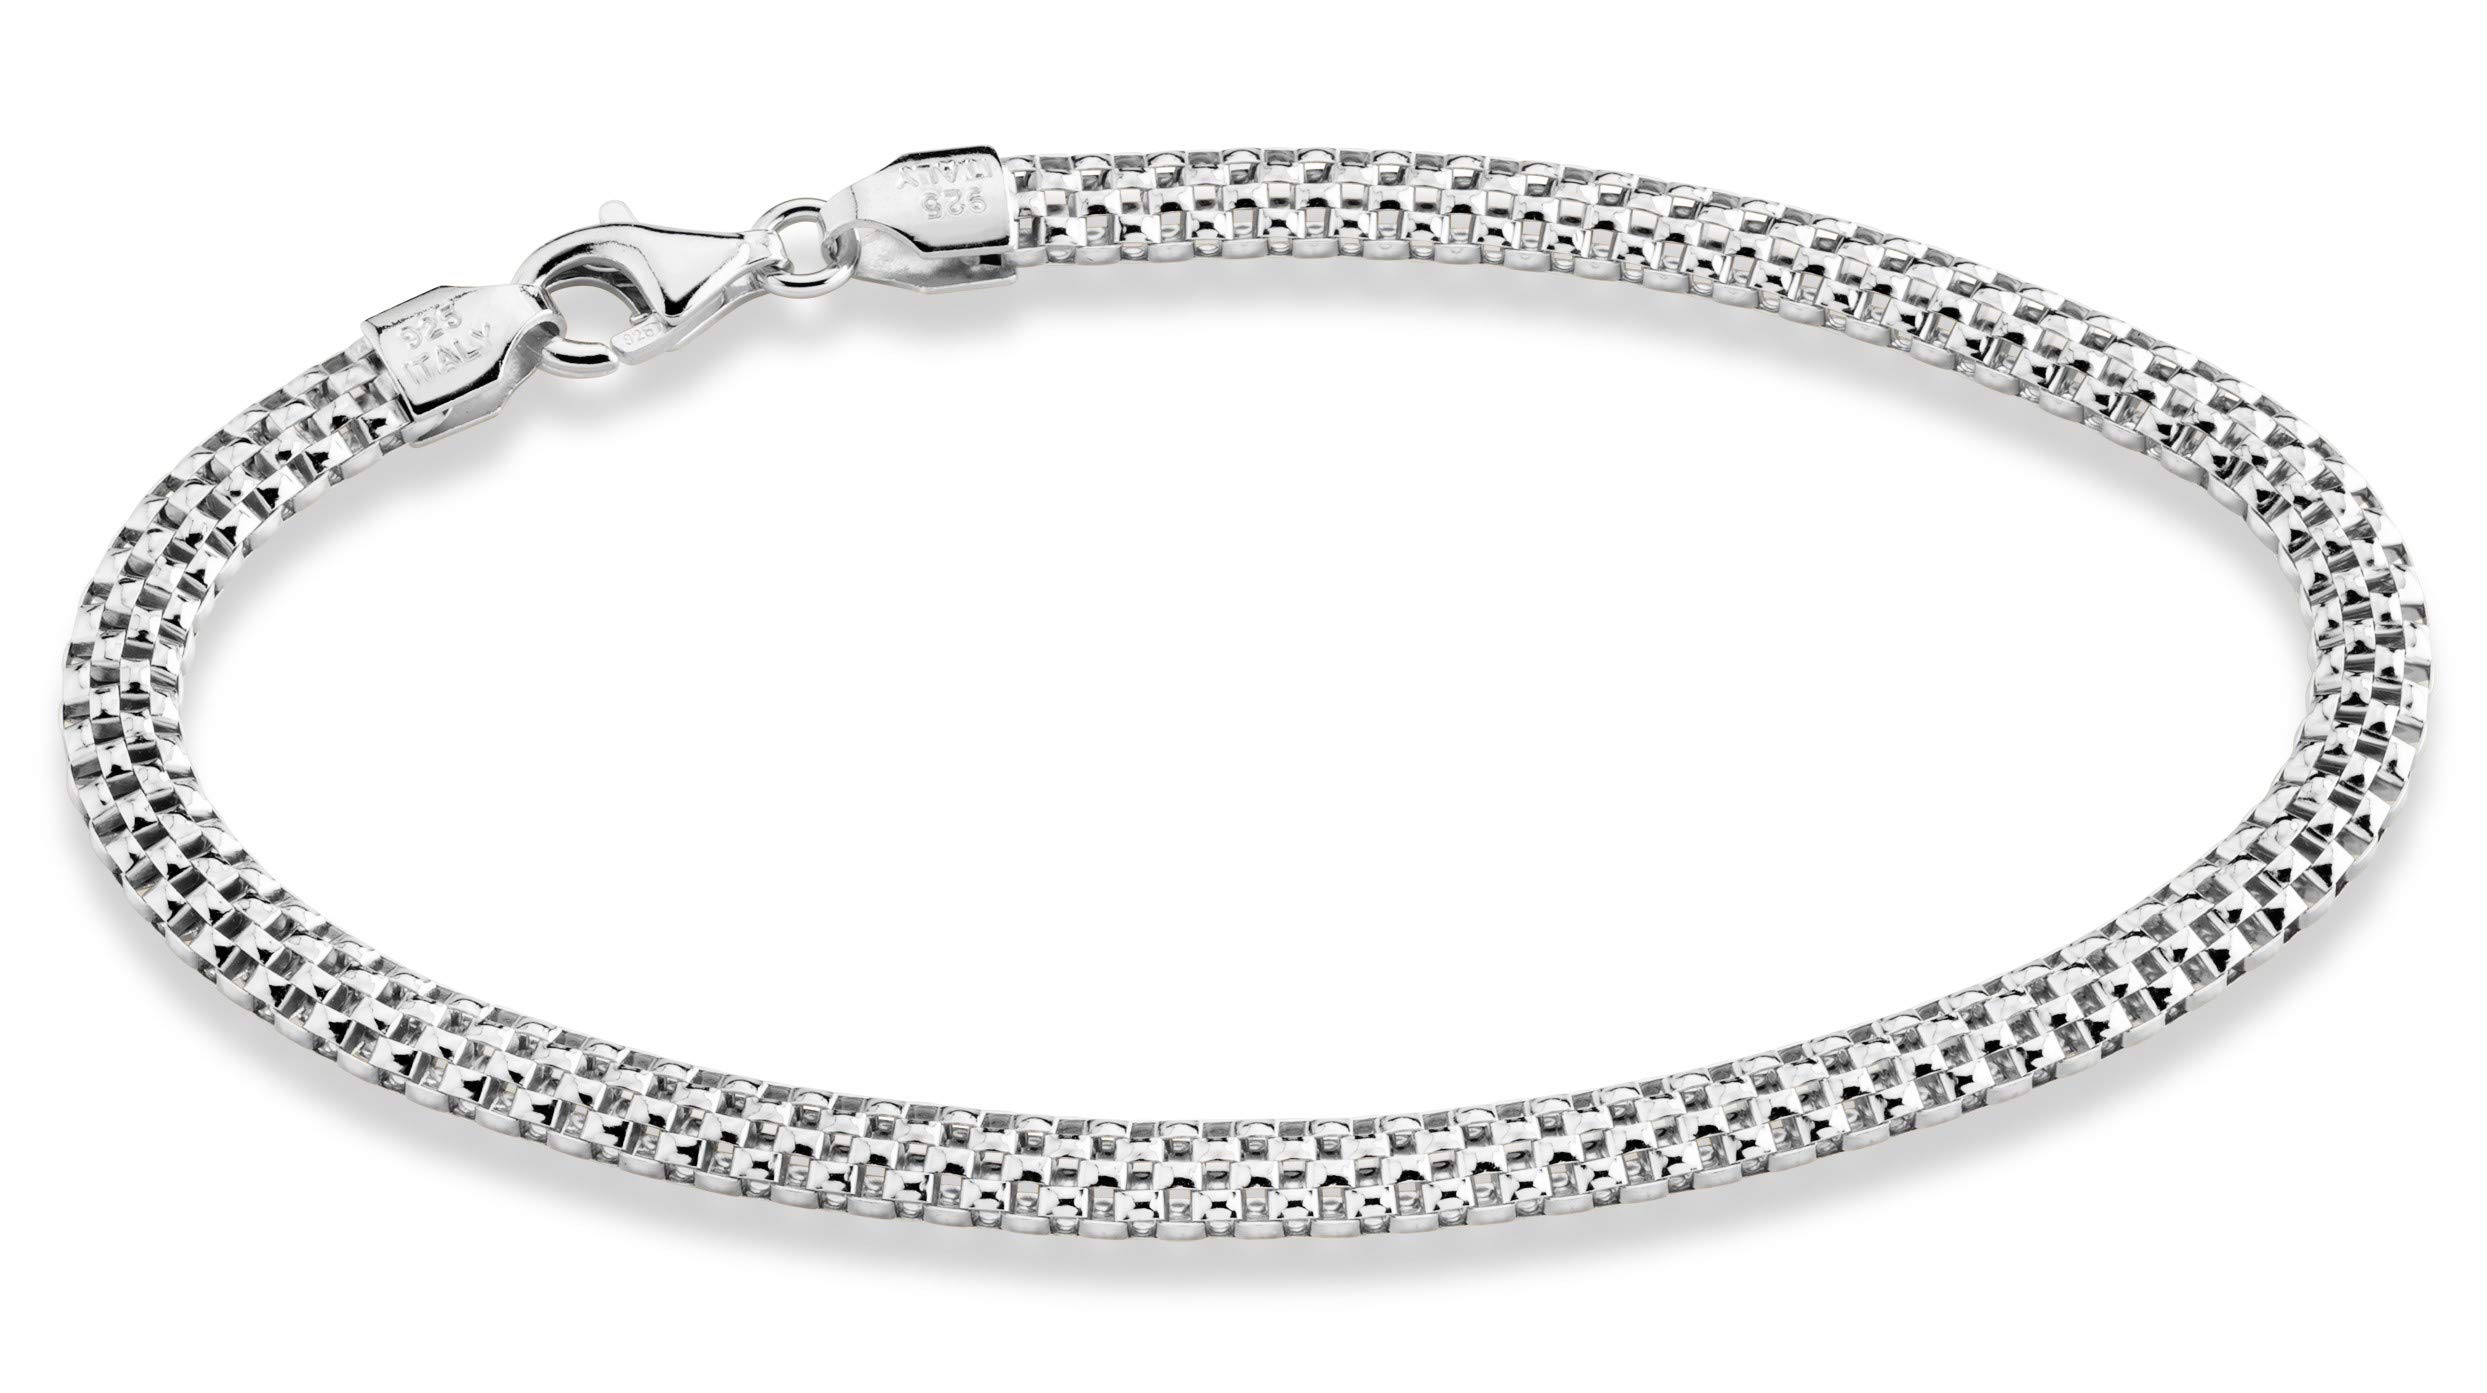 Miabella 925 Sterling Silver Italian 4mm Mesh Link Chain Bracelet for Women Teen Girls, Made in Italy